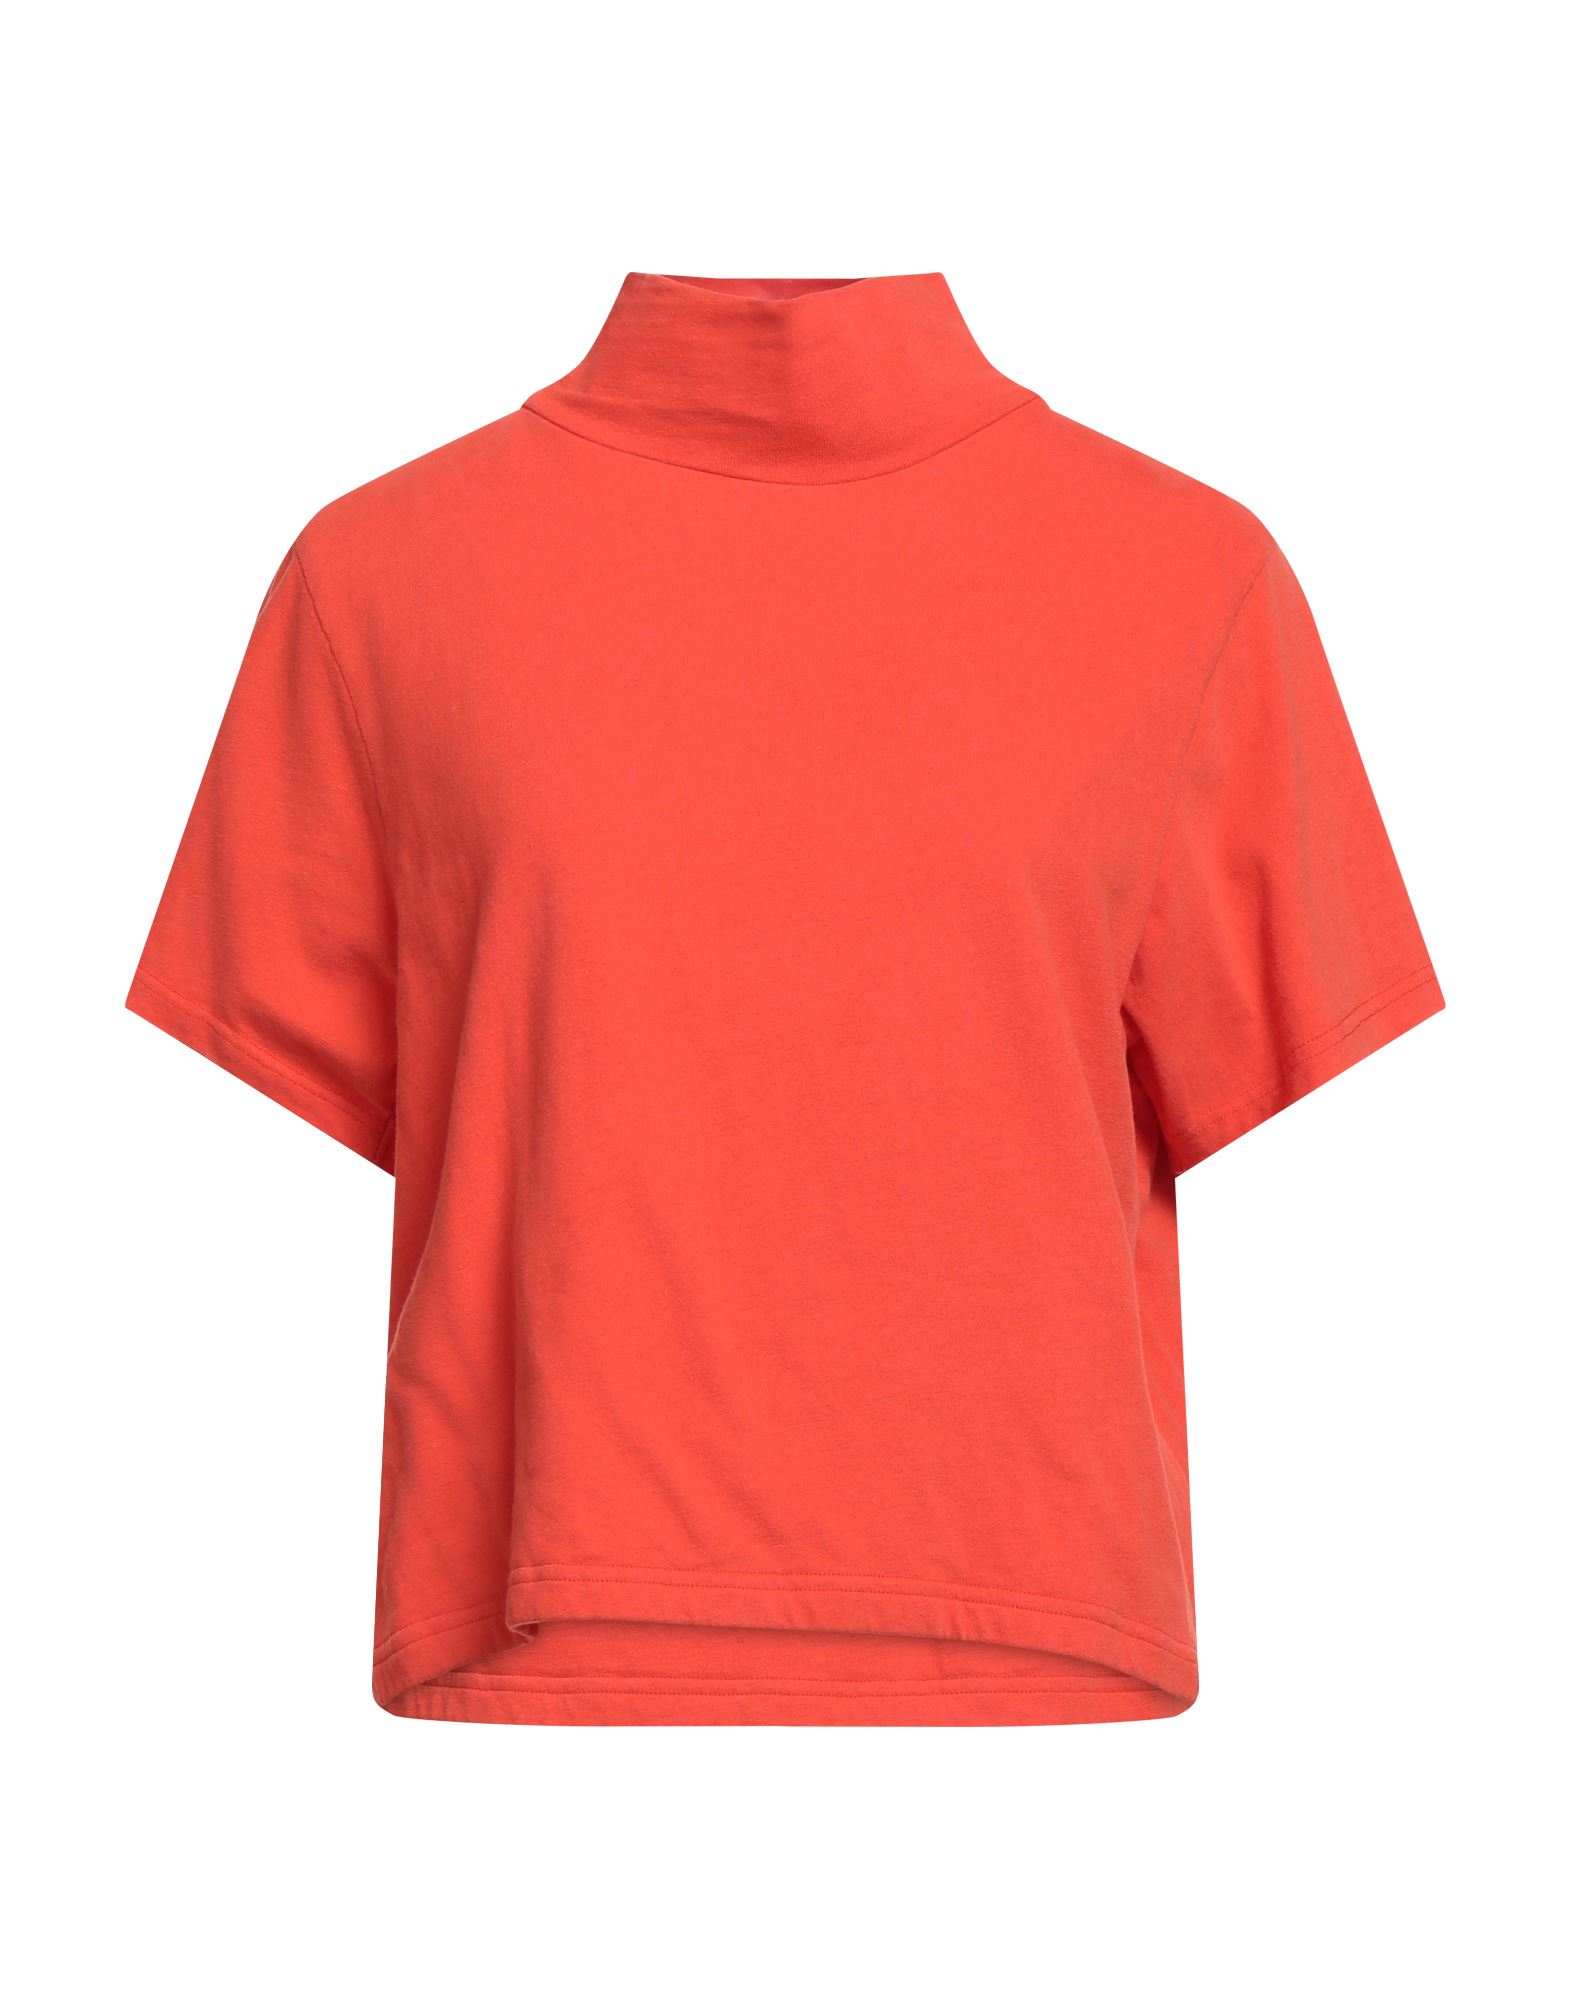 American Vintage T-shirts In Orange